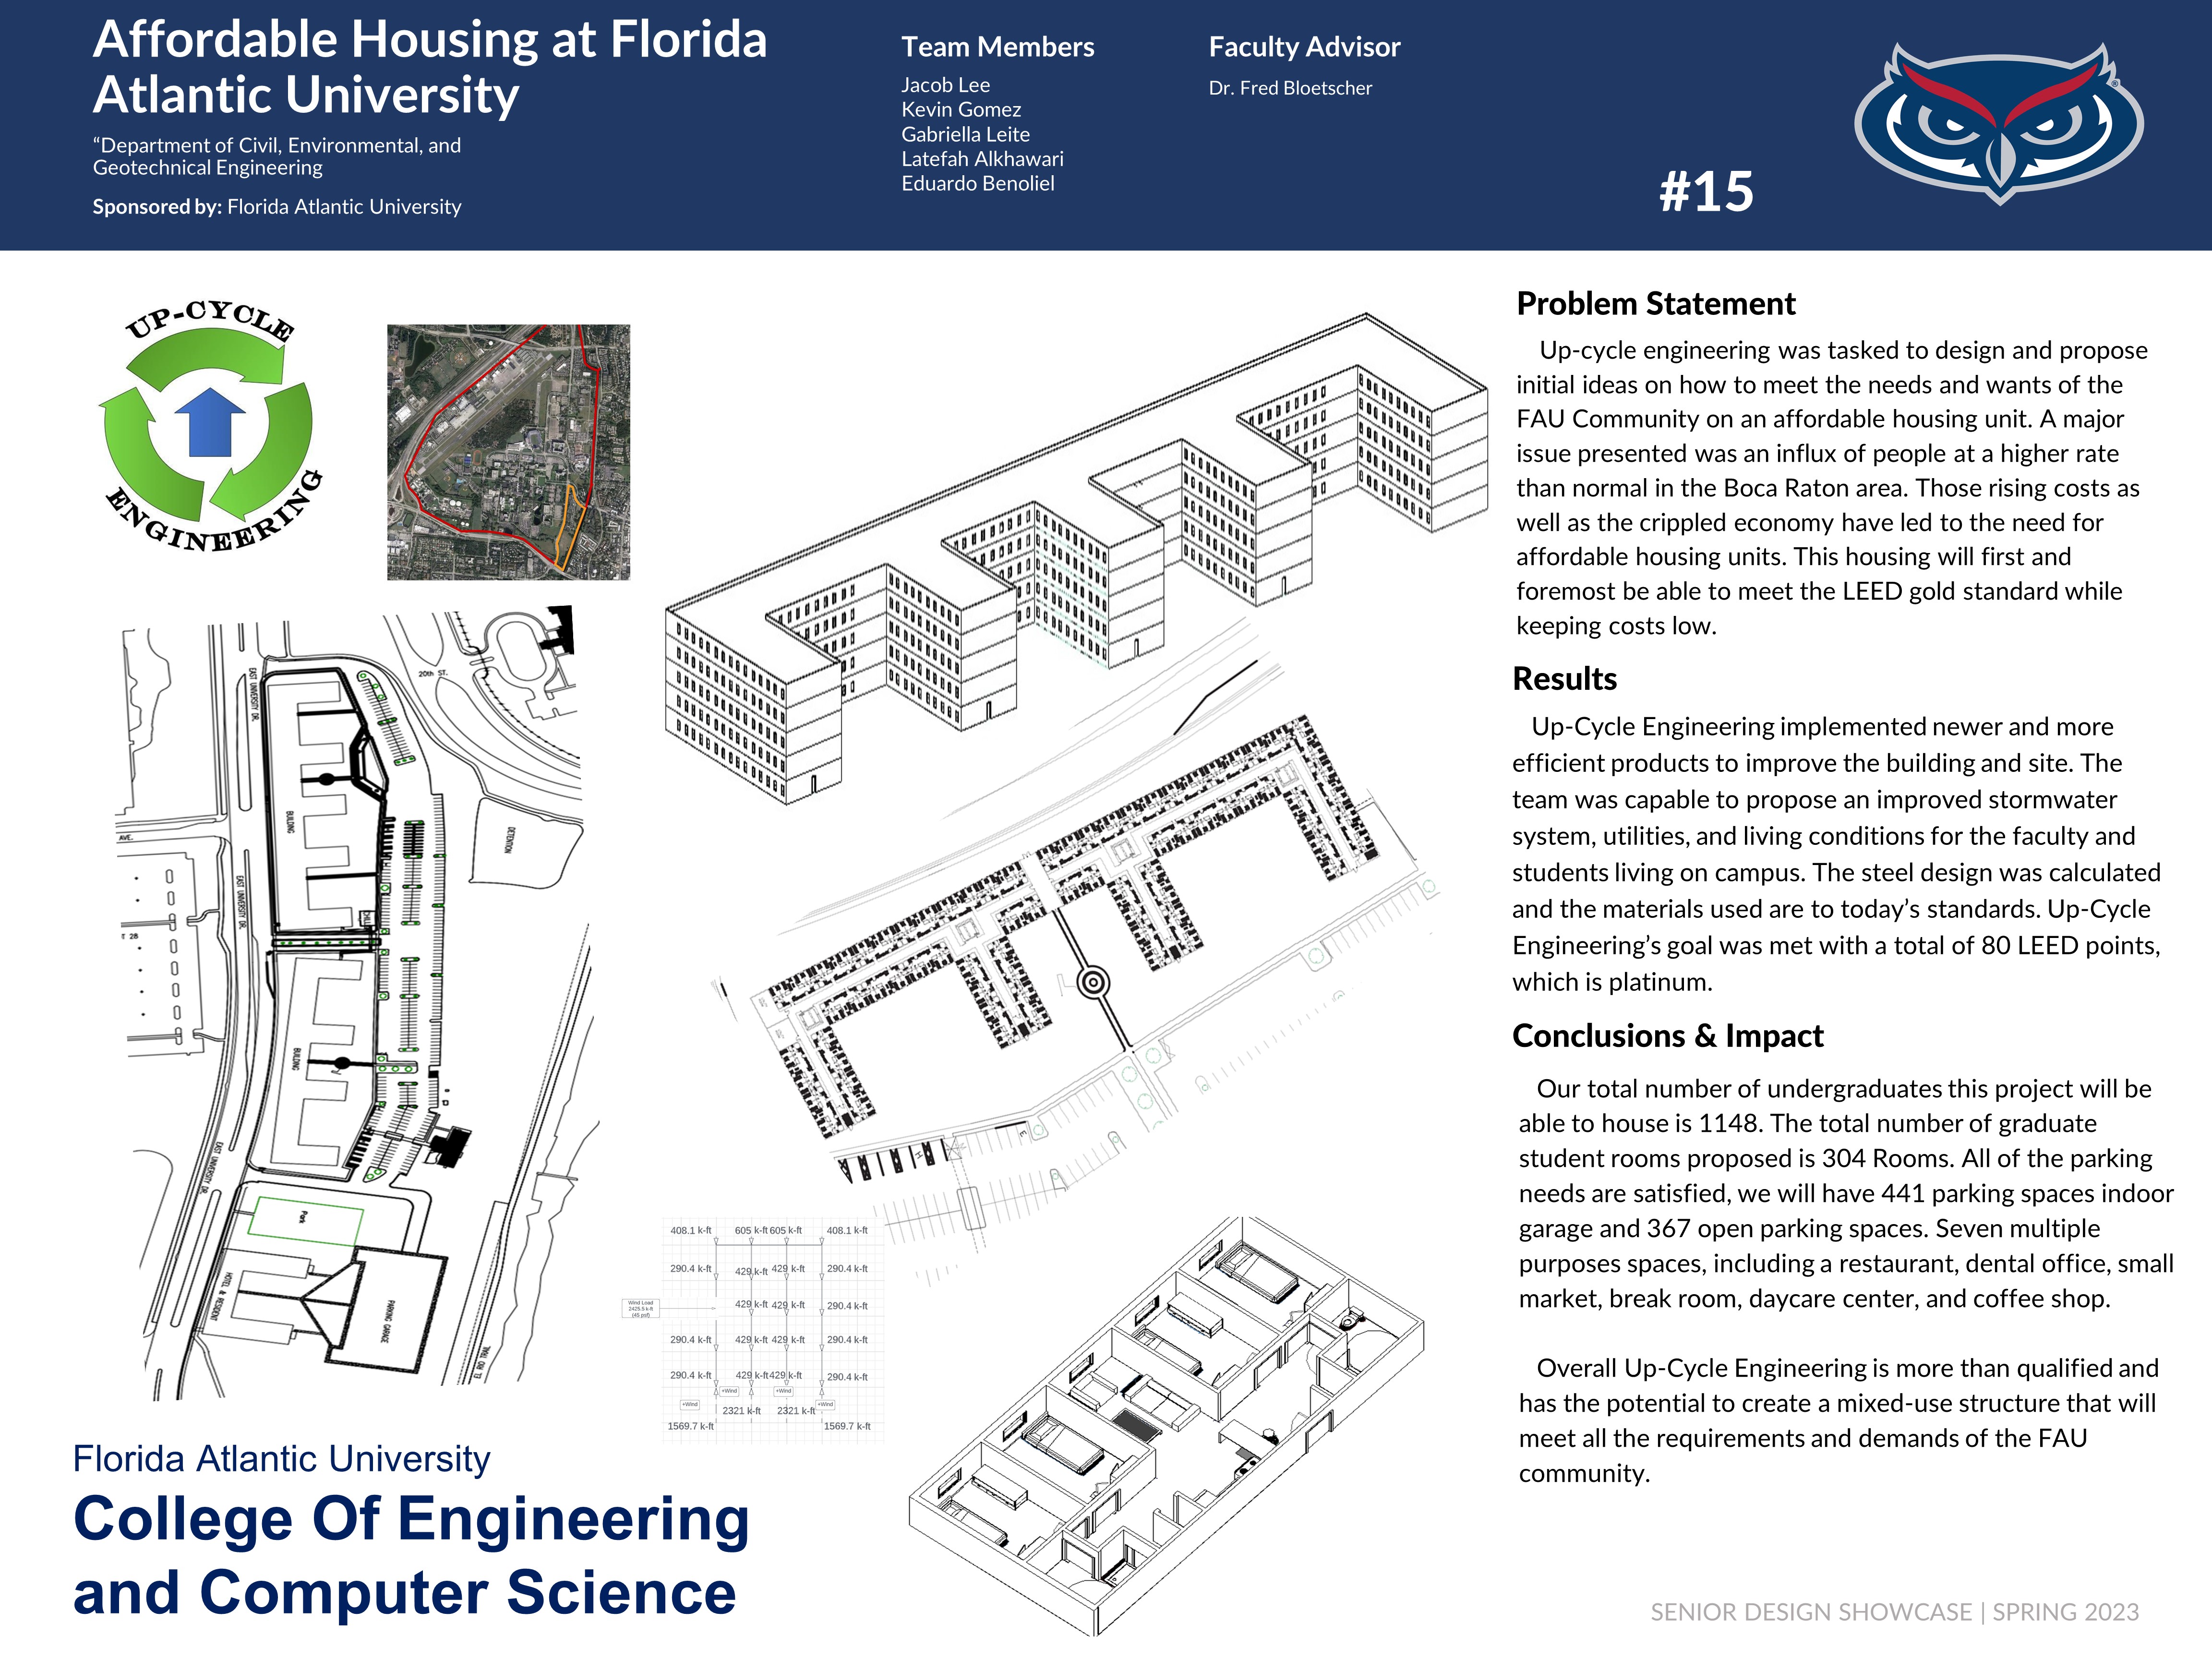 Affordable Housing at Florida Atlantic University (Upcycle Engineering)